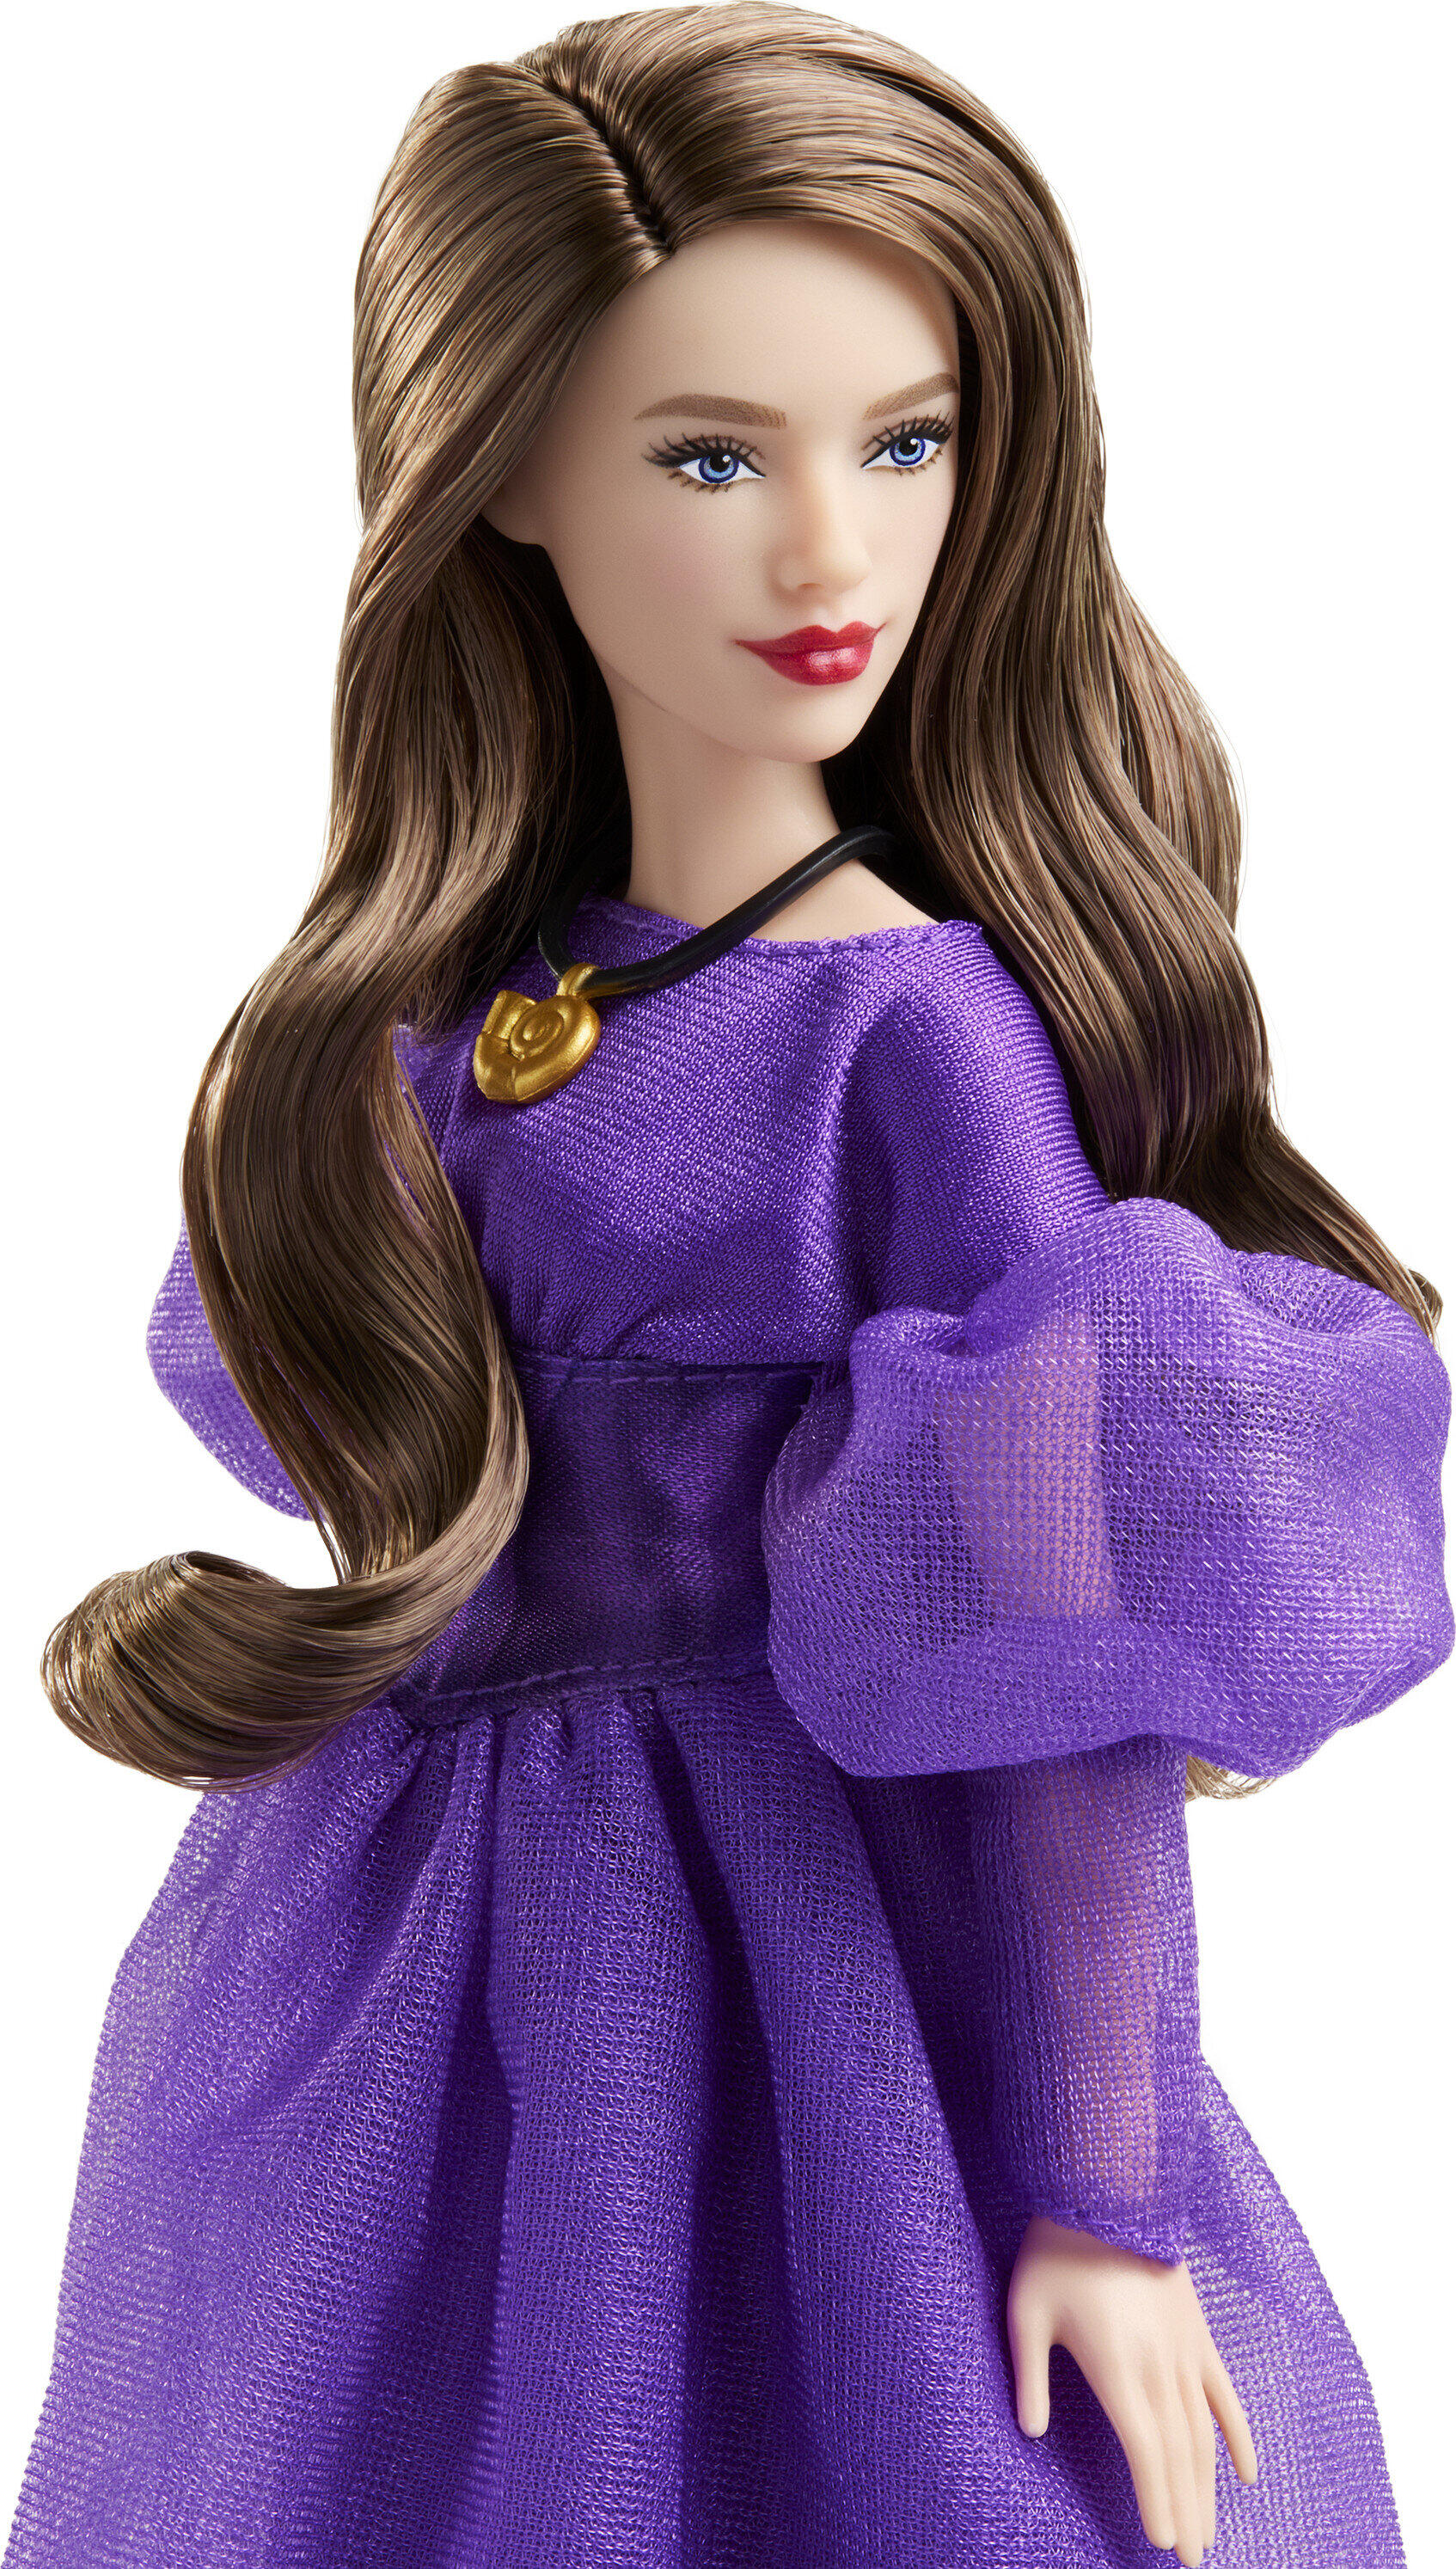 Disney The Little Mermaid Vanessa Fashion Doll in Signature Purple Dress - image 3 of 6